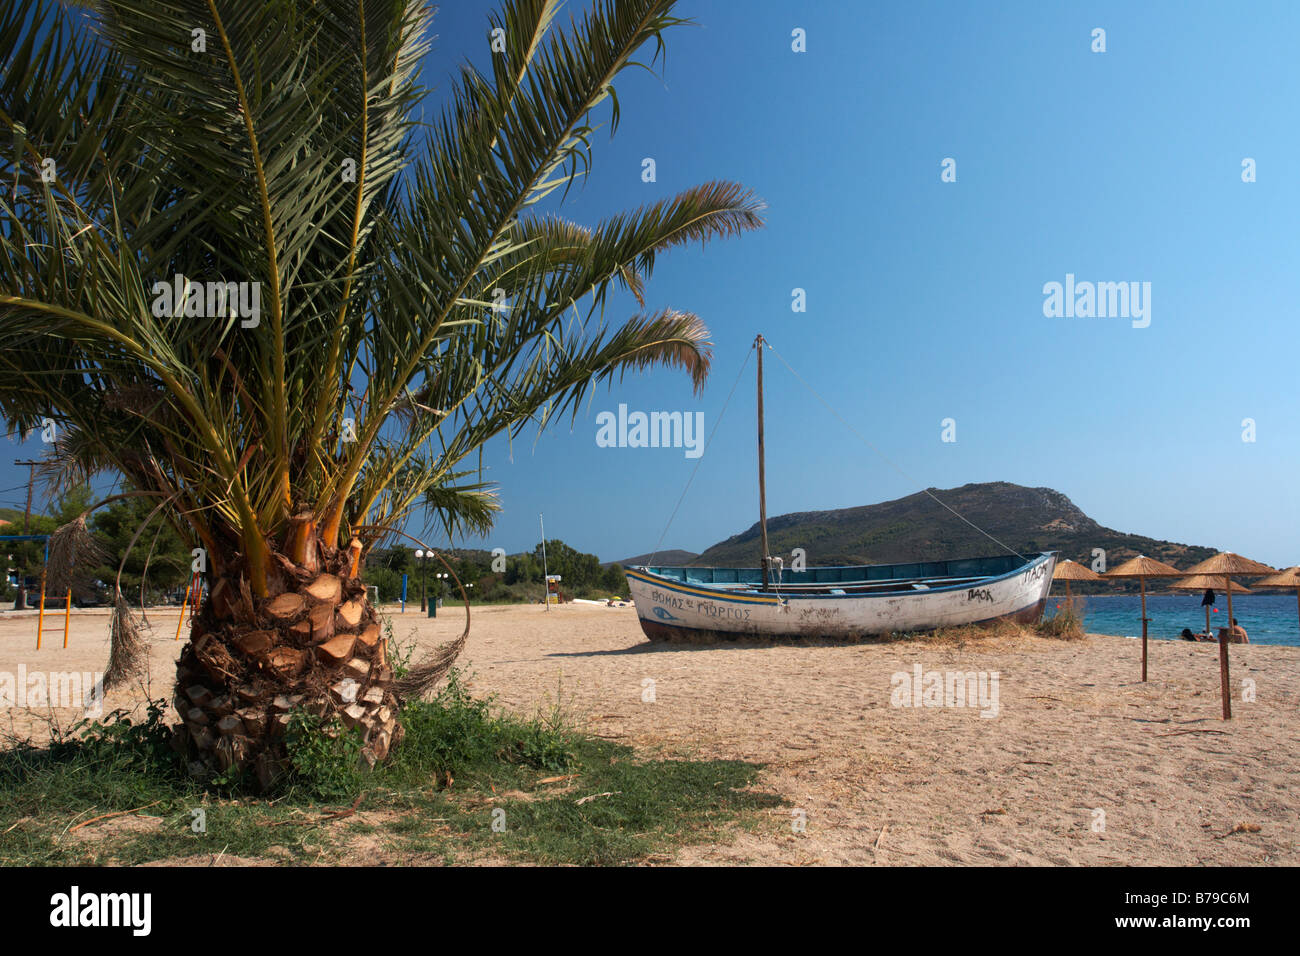 A palm and a boat on Toroni Beach Halkidiki Greece Stock Photo